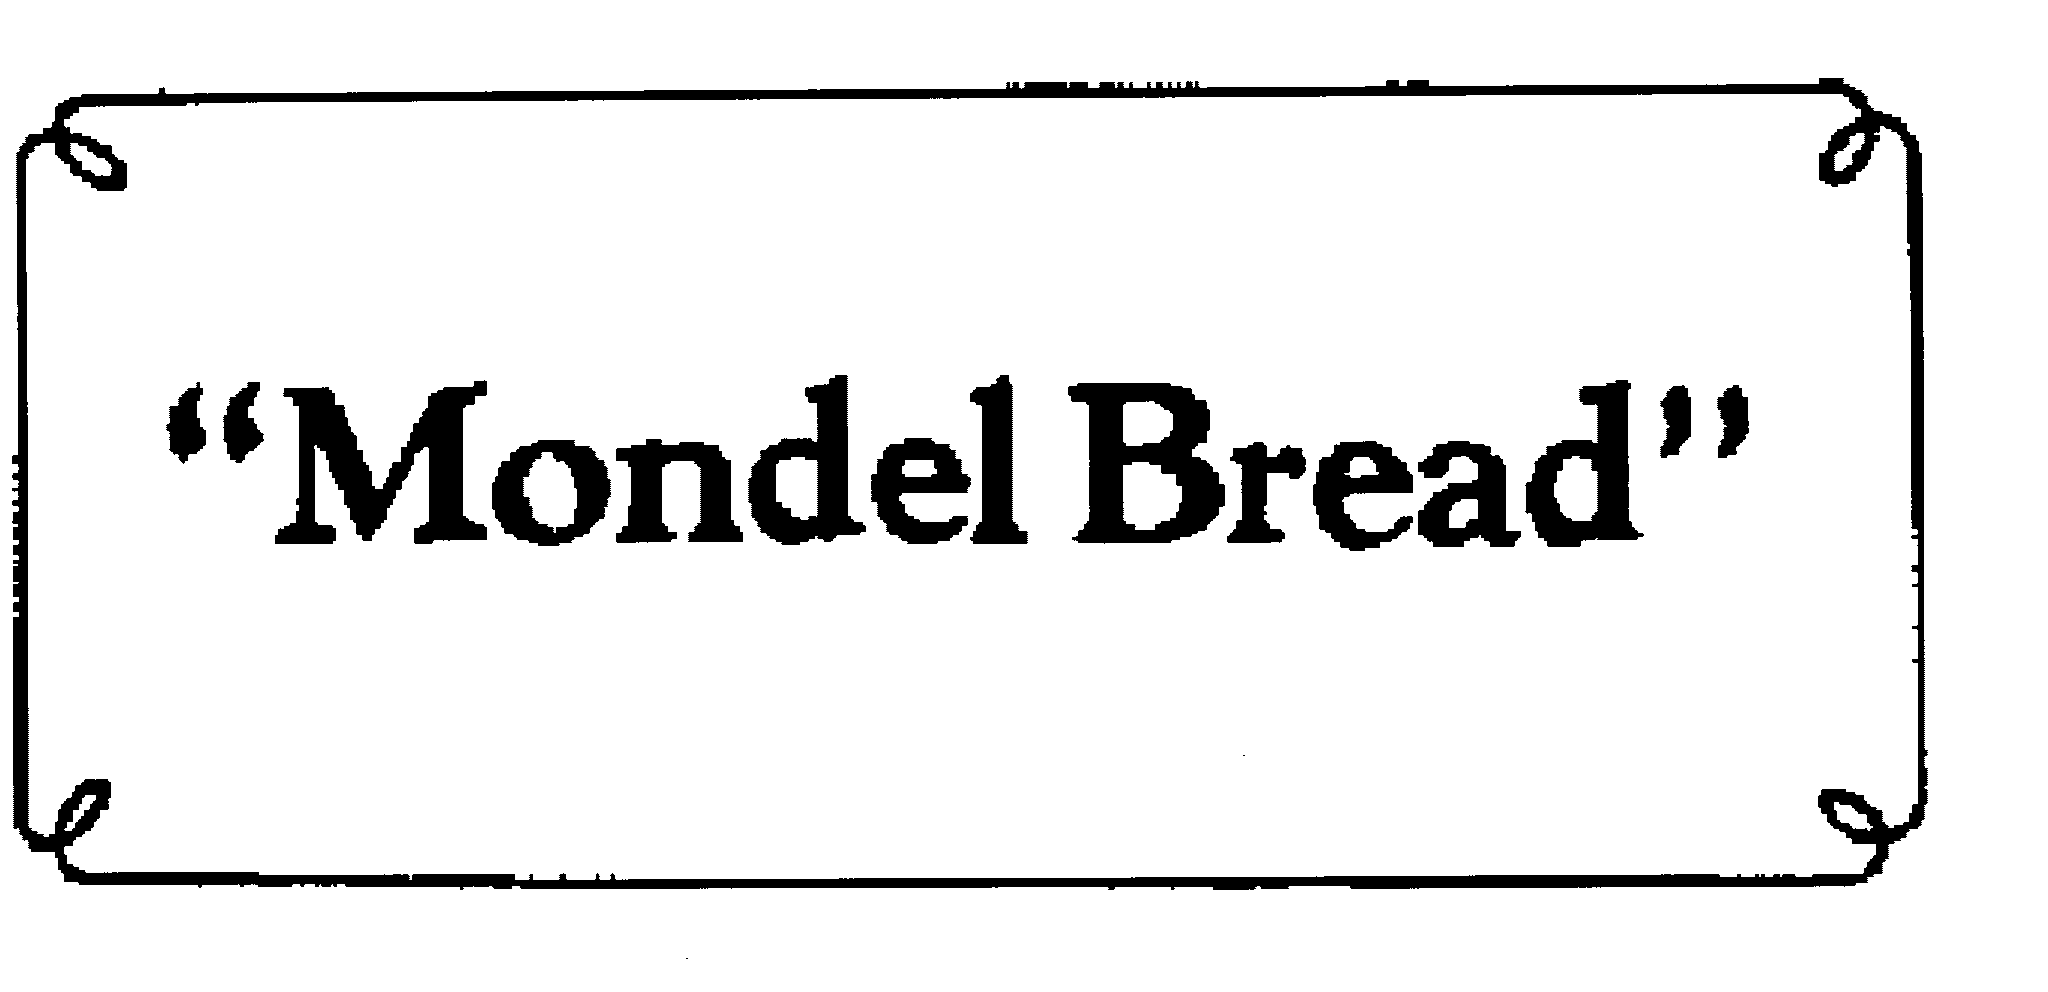  "MONDEL BREAD"